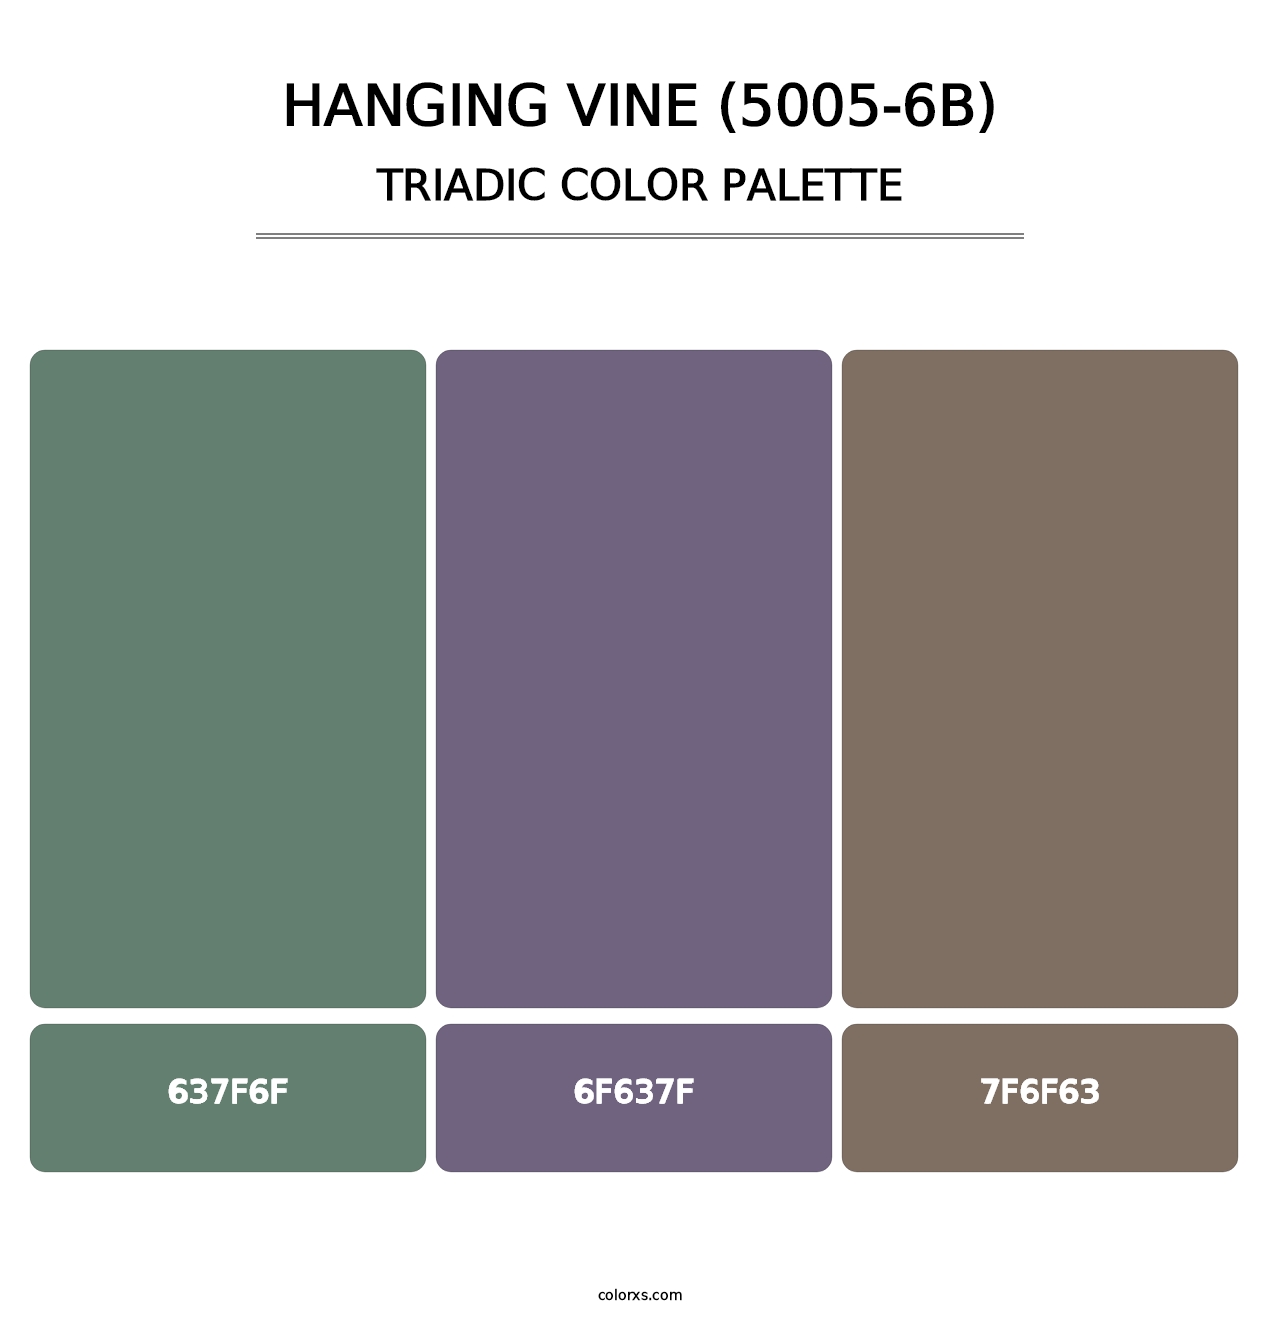 Hanging Vine (5005-6B) - Triadic Color Palette